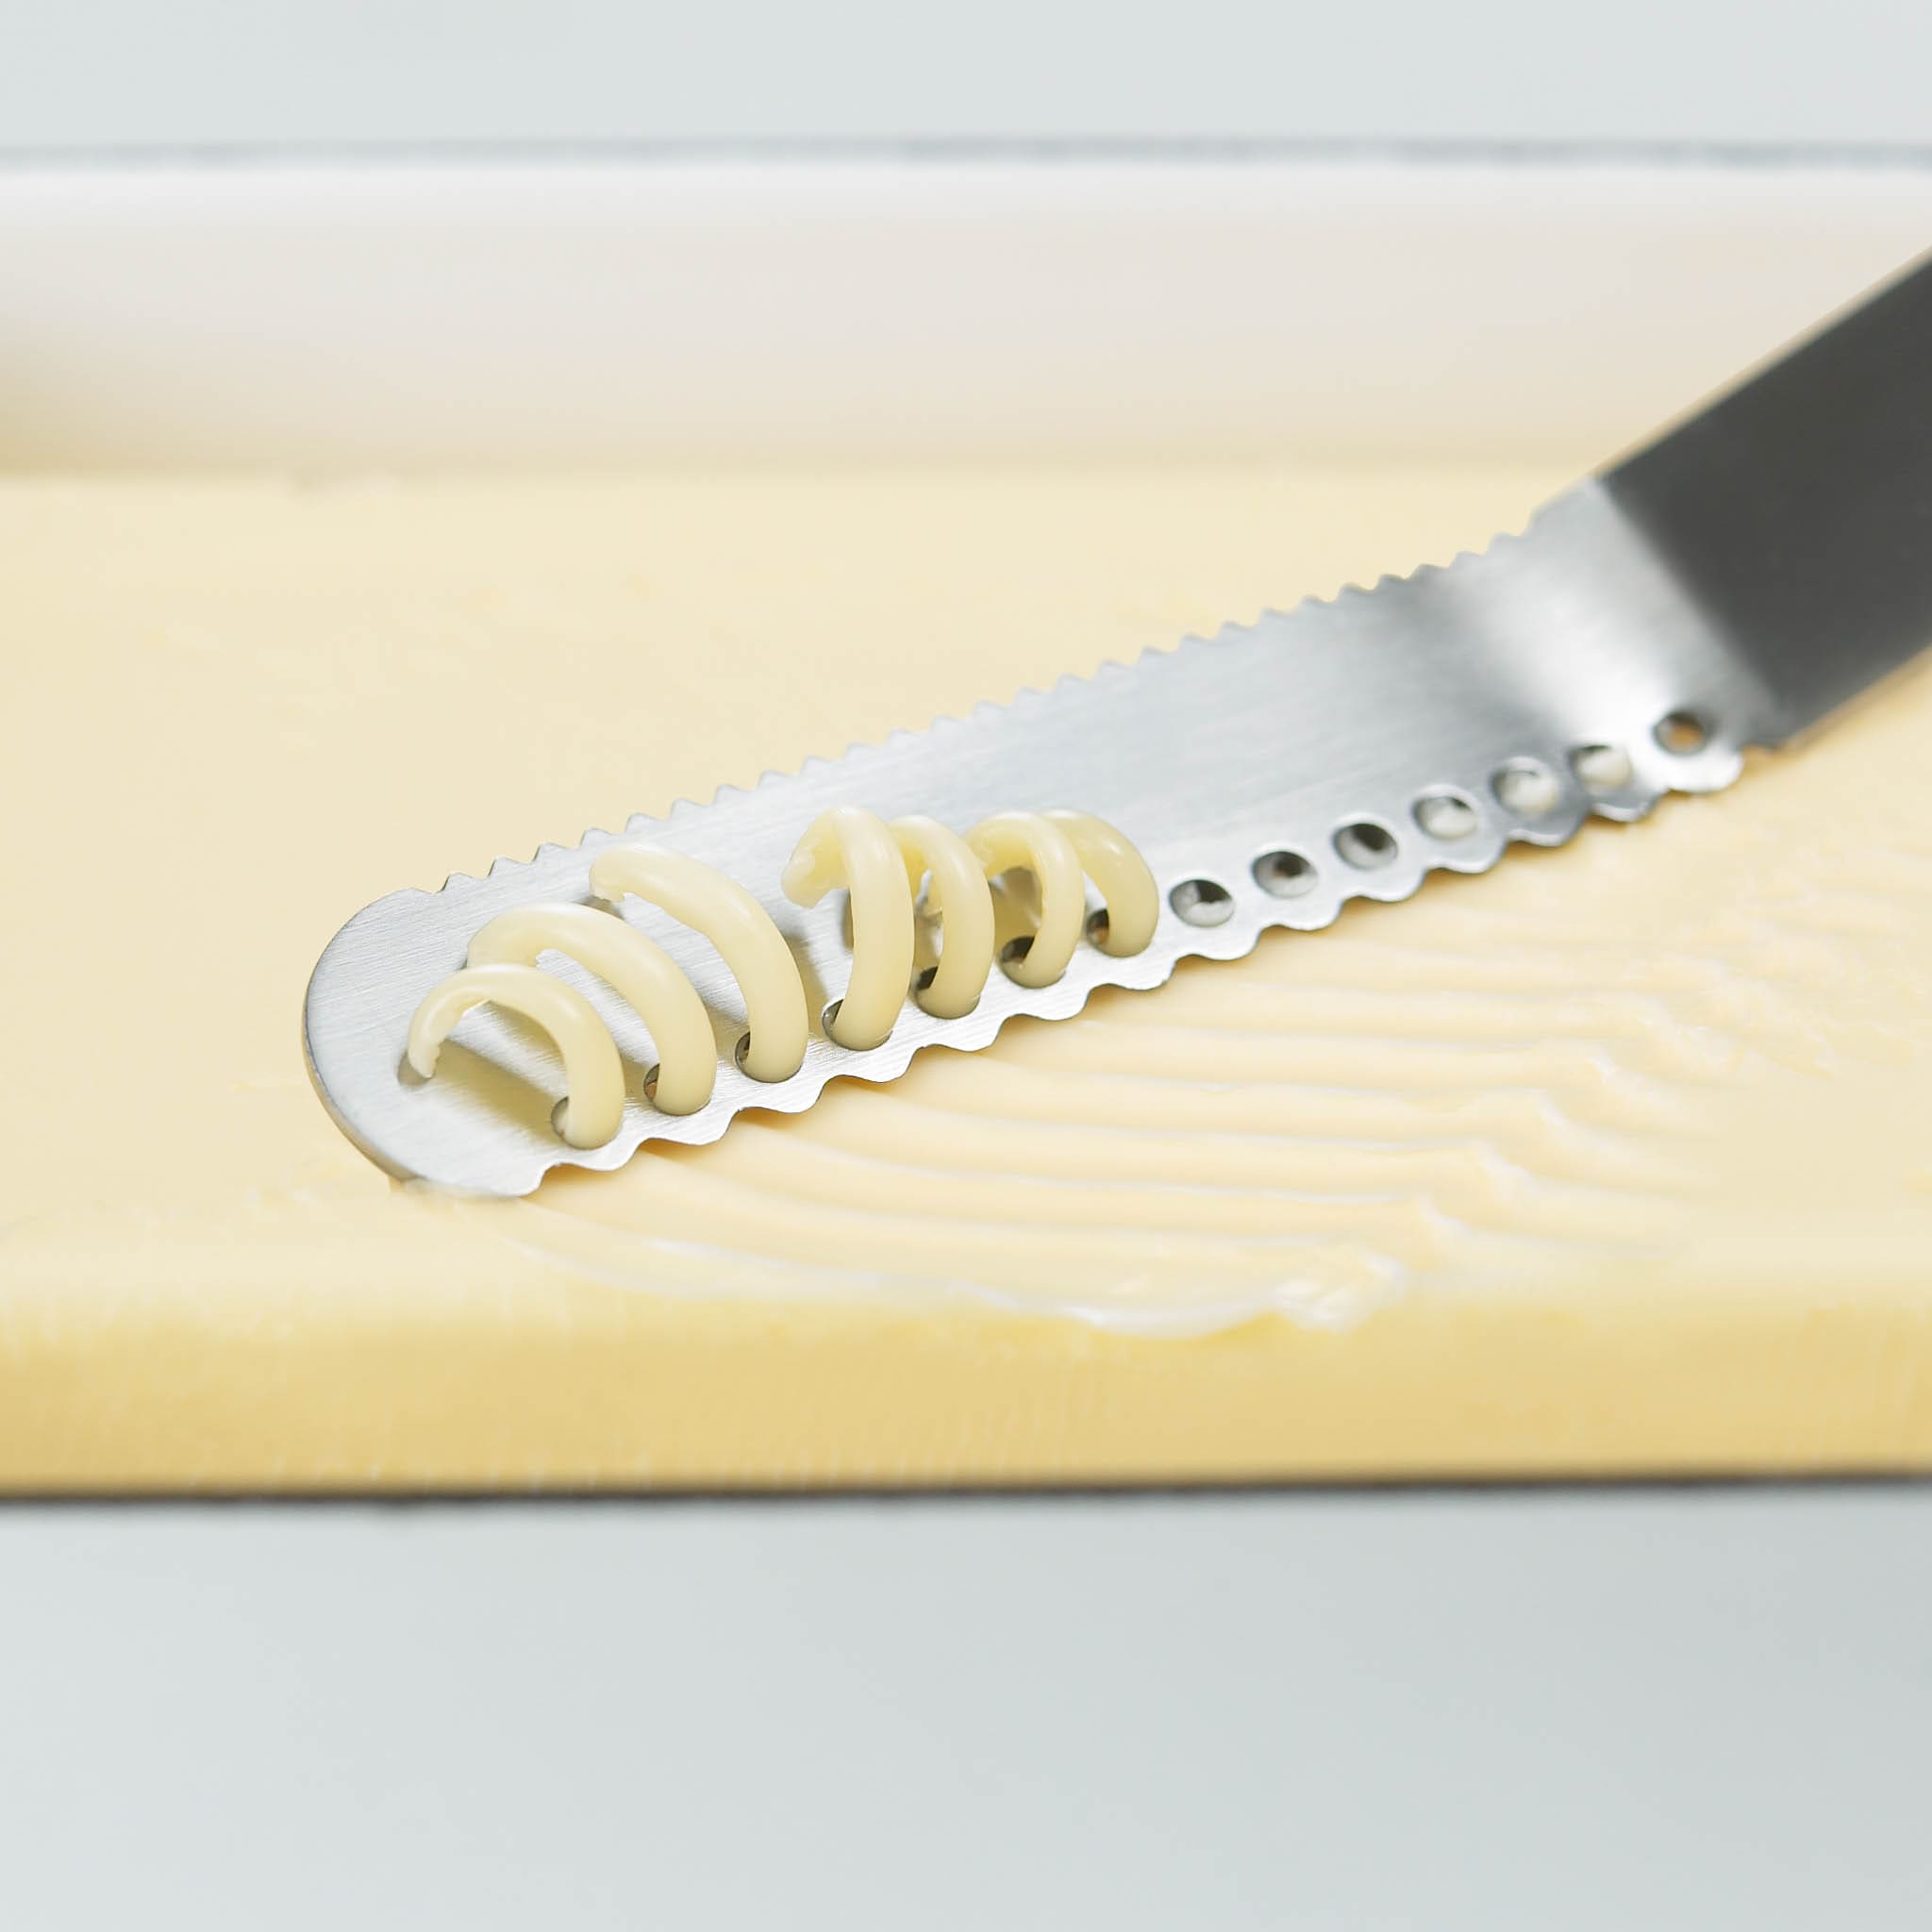 Yukihara Stainless Steel Butter Knife